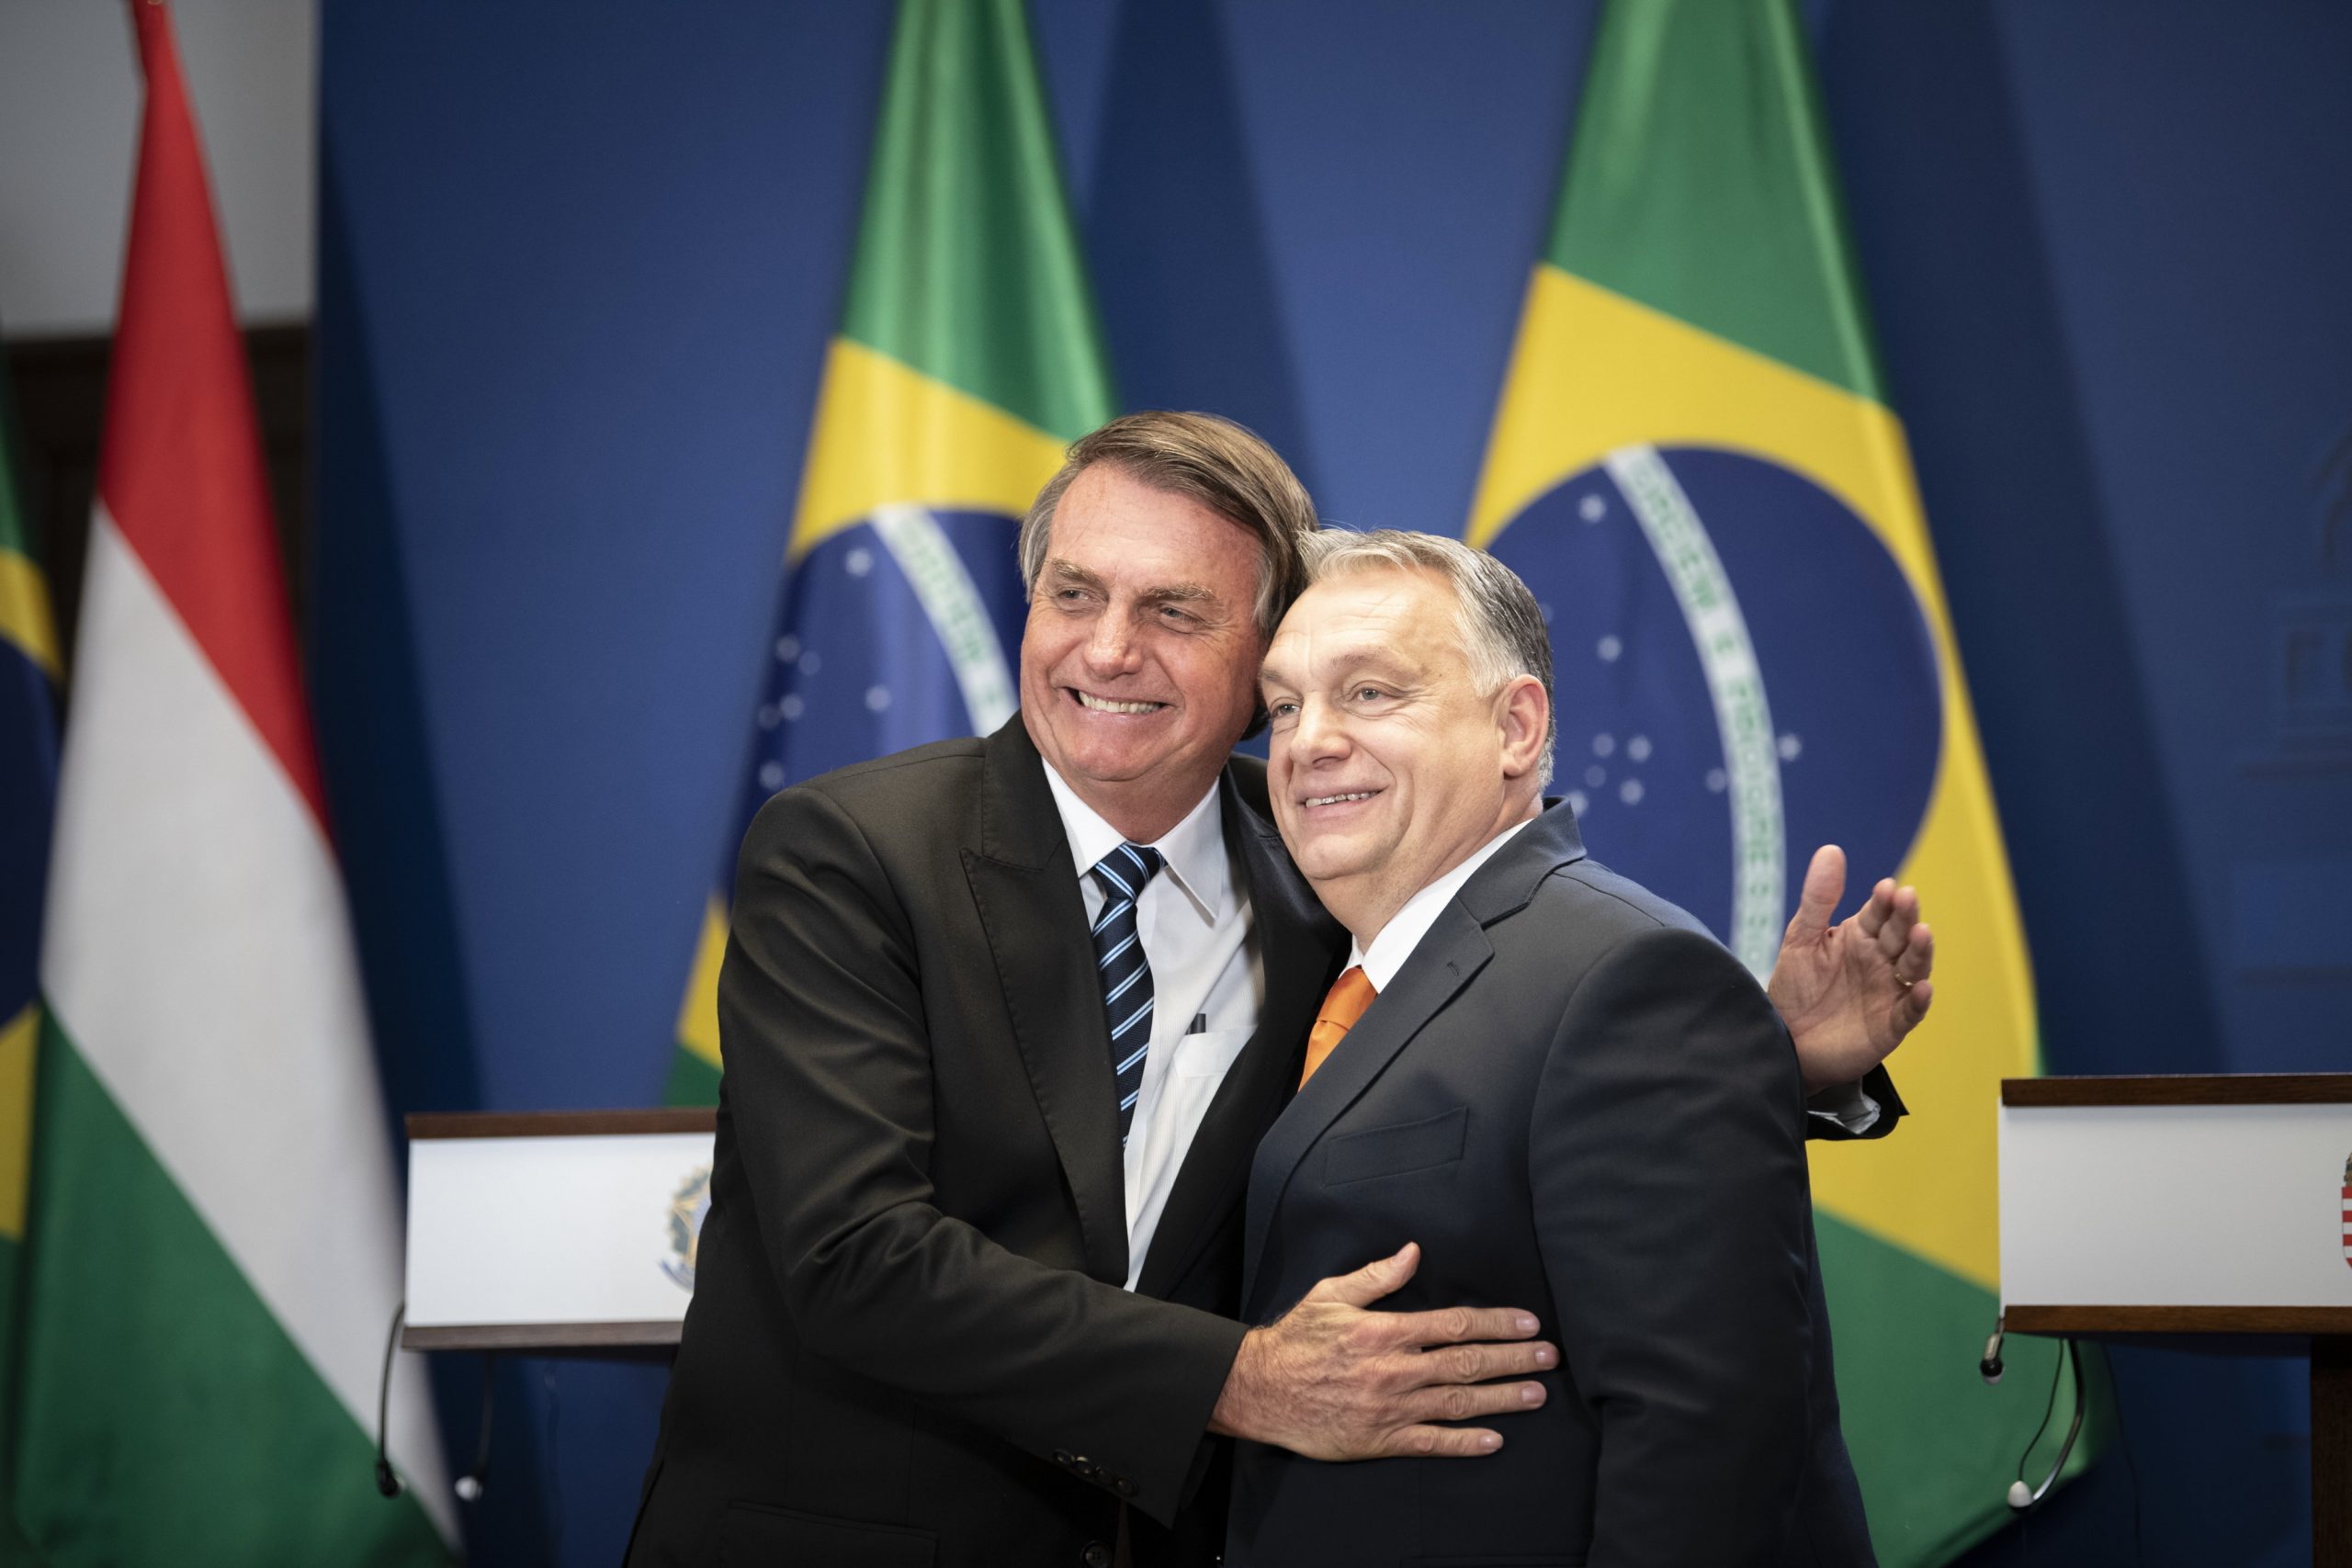 Orbán Meeting Bolsonaro: Hungary and Brazil in 